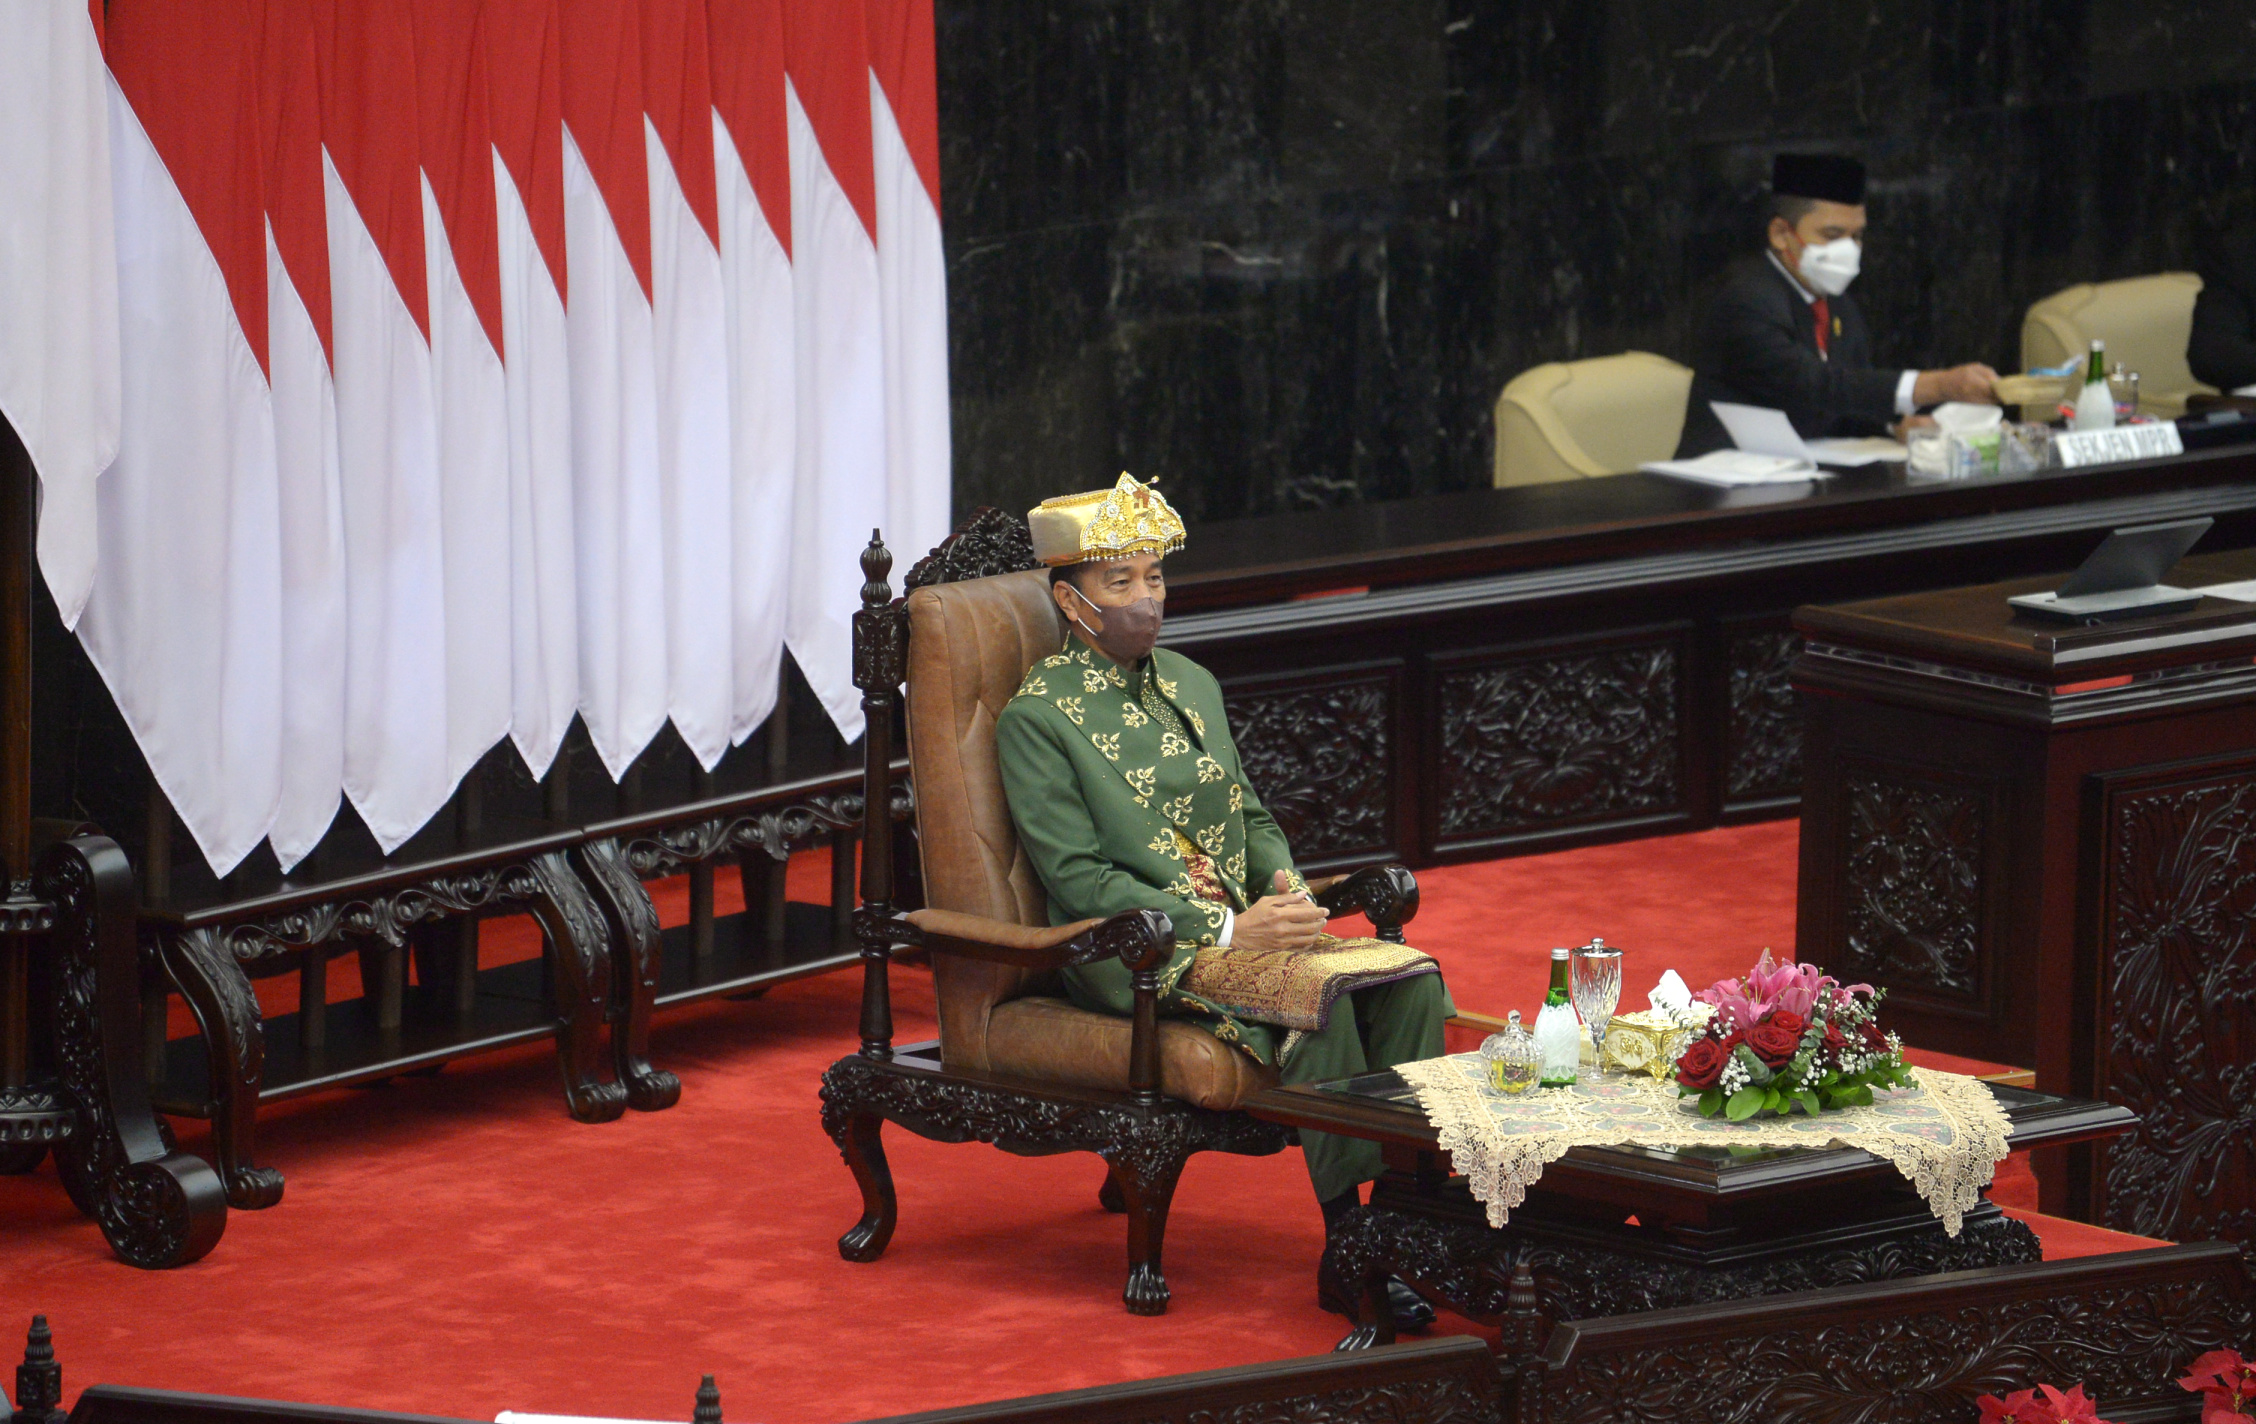 Sidang tahunan MPR RI serta Pidato Kenegaraan Presiden Jokowi (Ashar/SinPo.id)